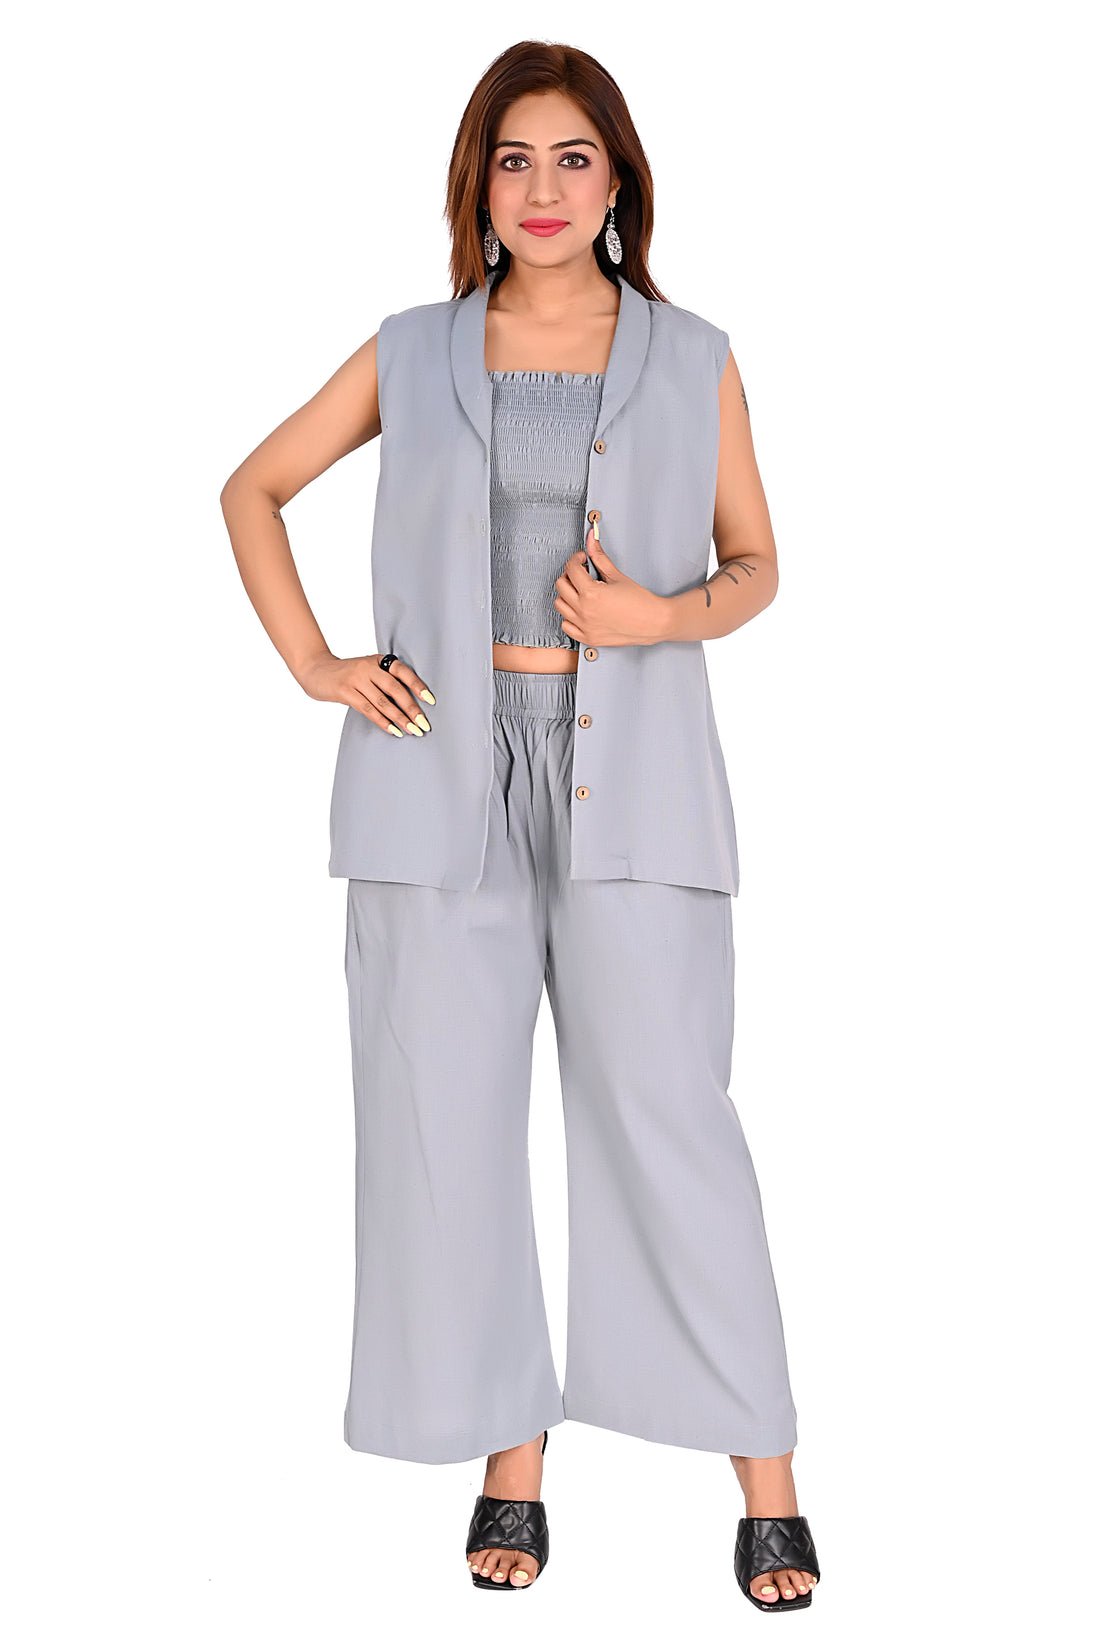 Nirmal online Premium cotton Co-ord set for Women in grey colour